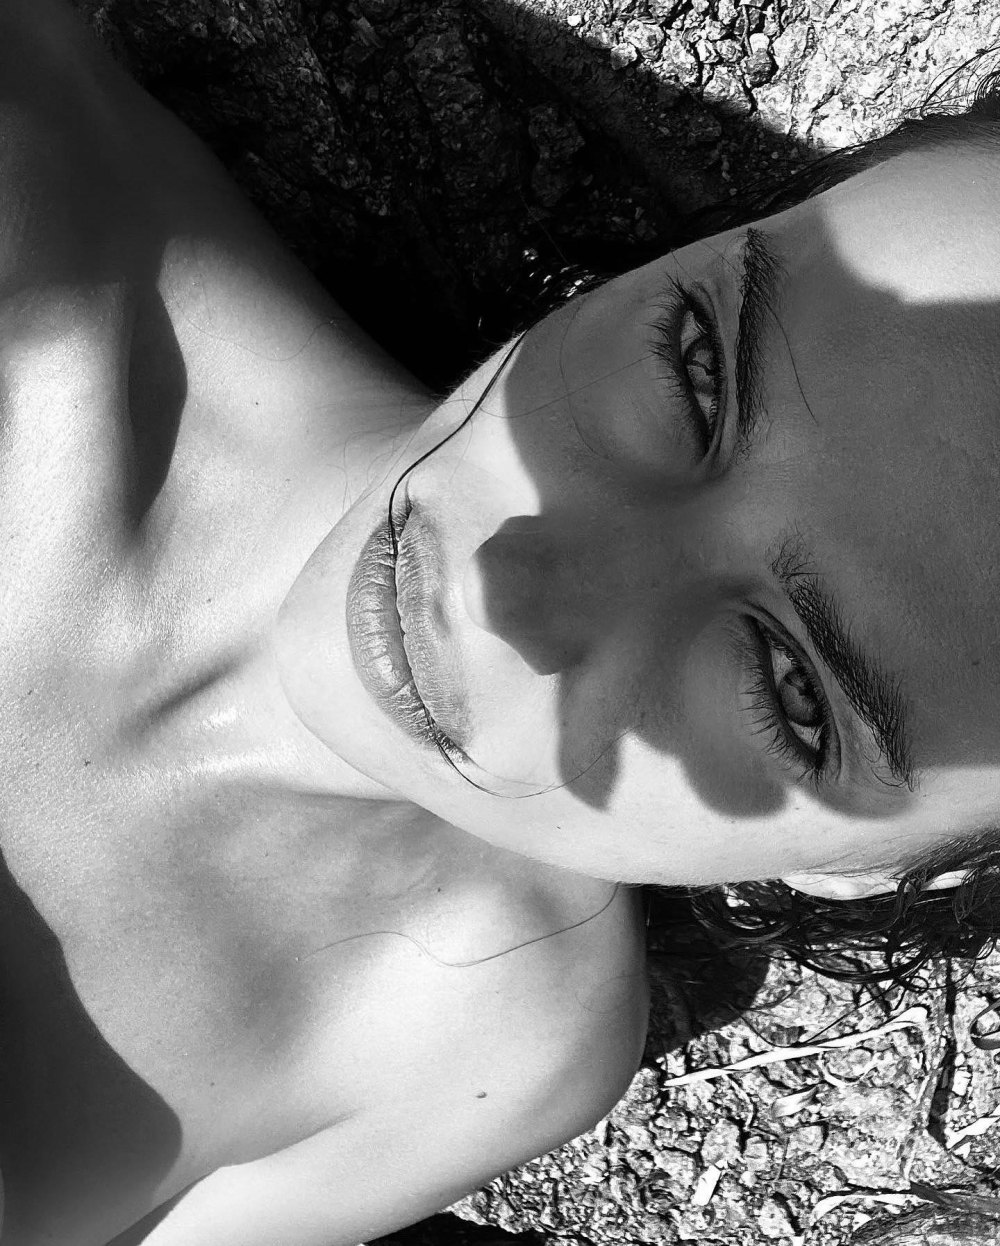 Irina Shayk Goes Topless on Summer Getaway With Ex Bradley Cooper Amid Tom Brady Romance 3